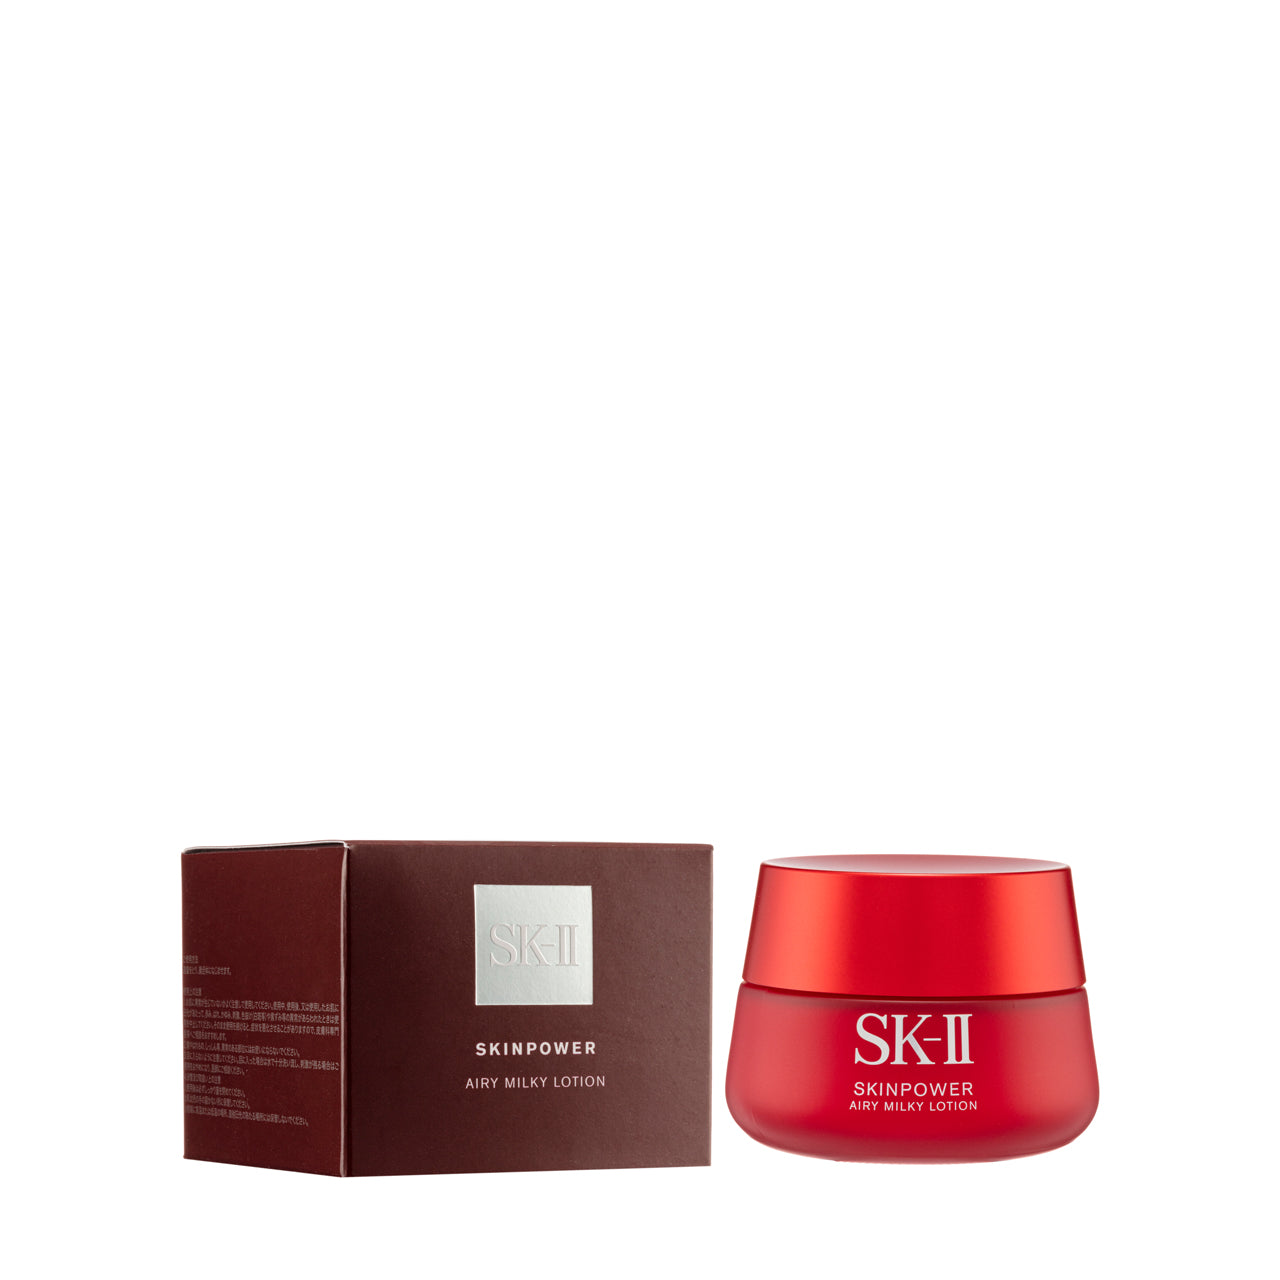 SK-II Skinpower Airy Milky Lotion | Sasa Global eShop